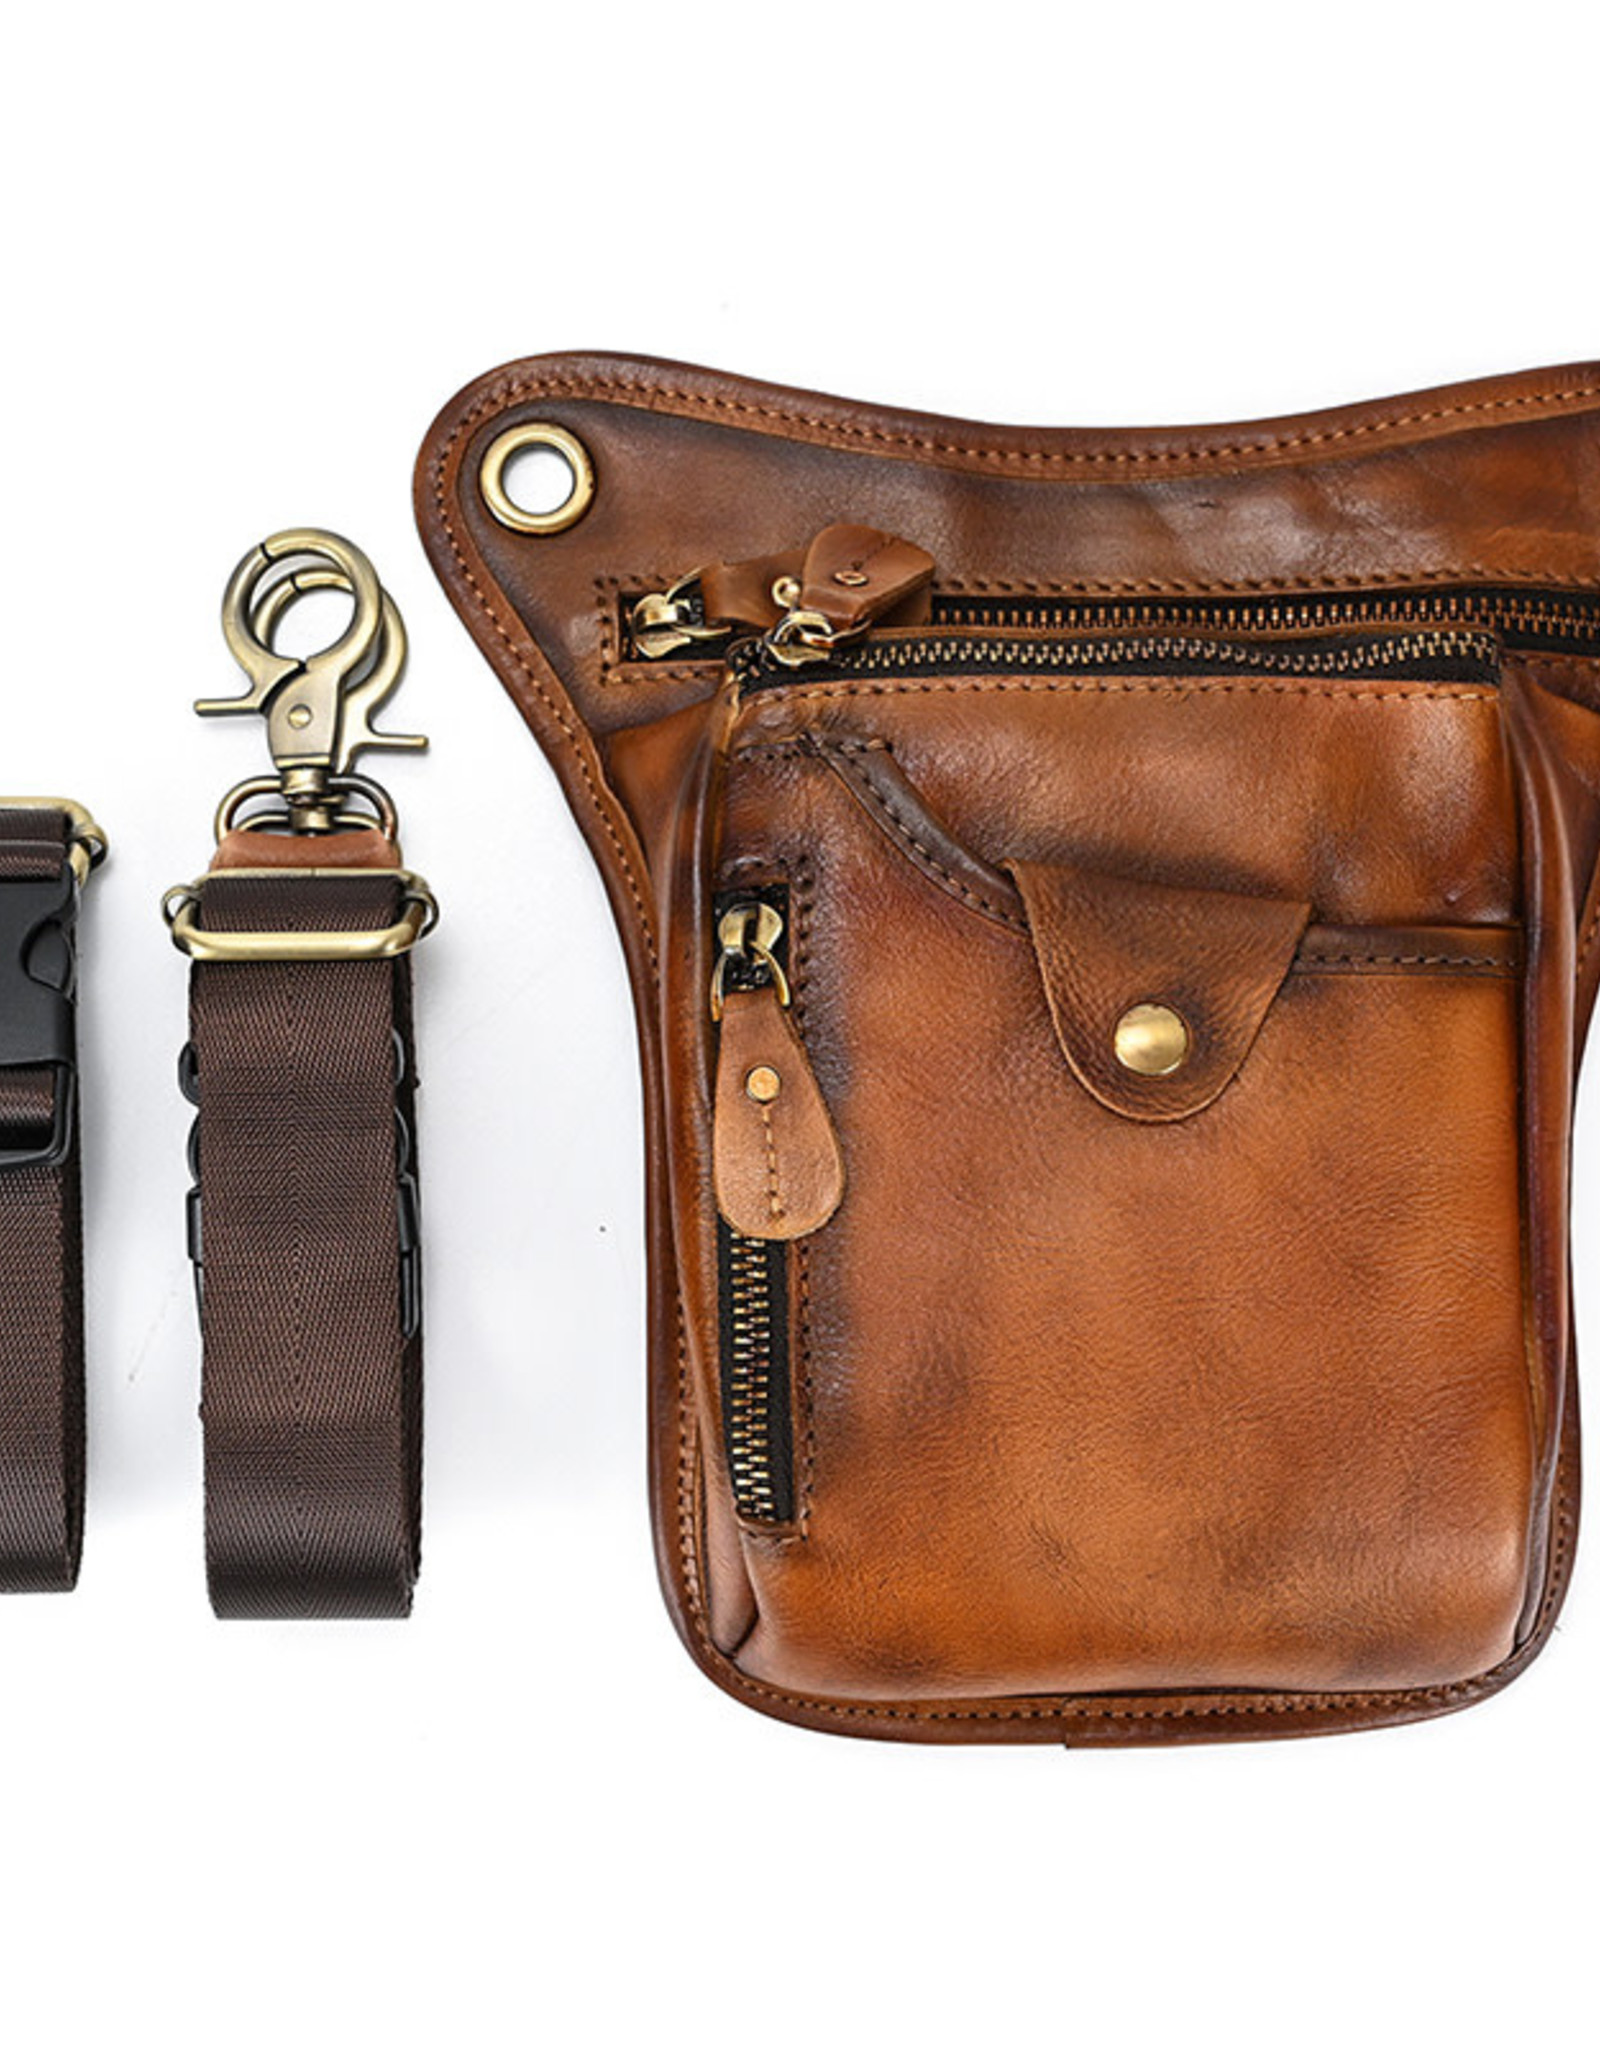 Designer Shoulder Bags For Women Handbags Fashion Bags Genuine Leather  Camera Bag From Lwz2741787, $23.32